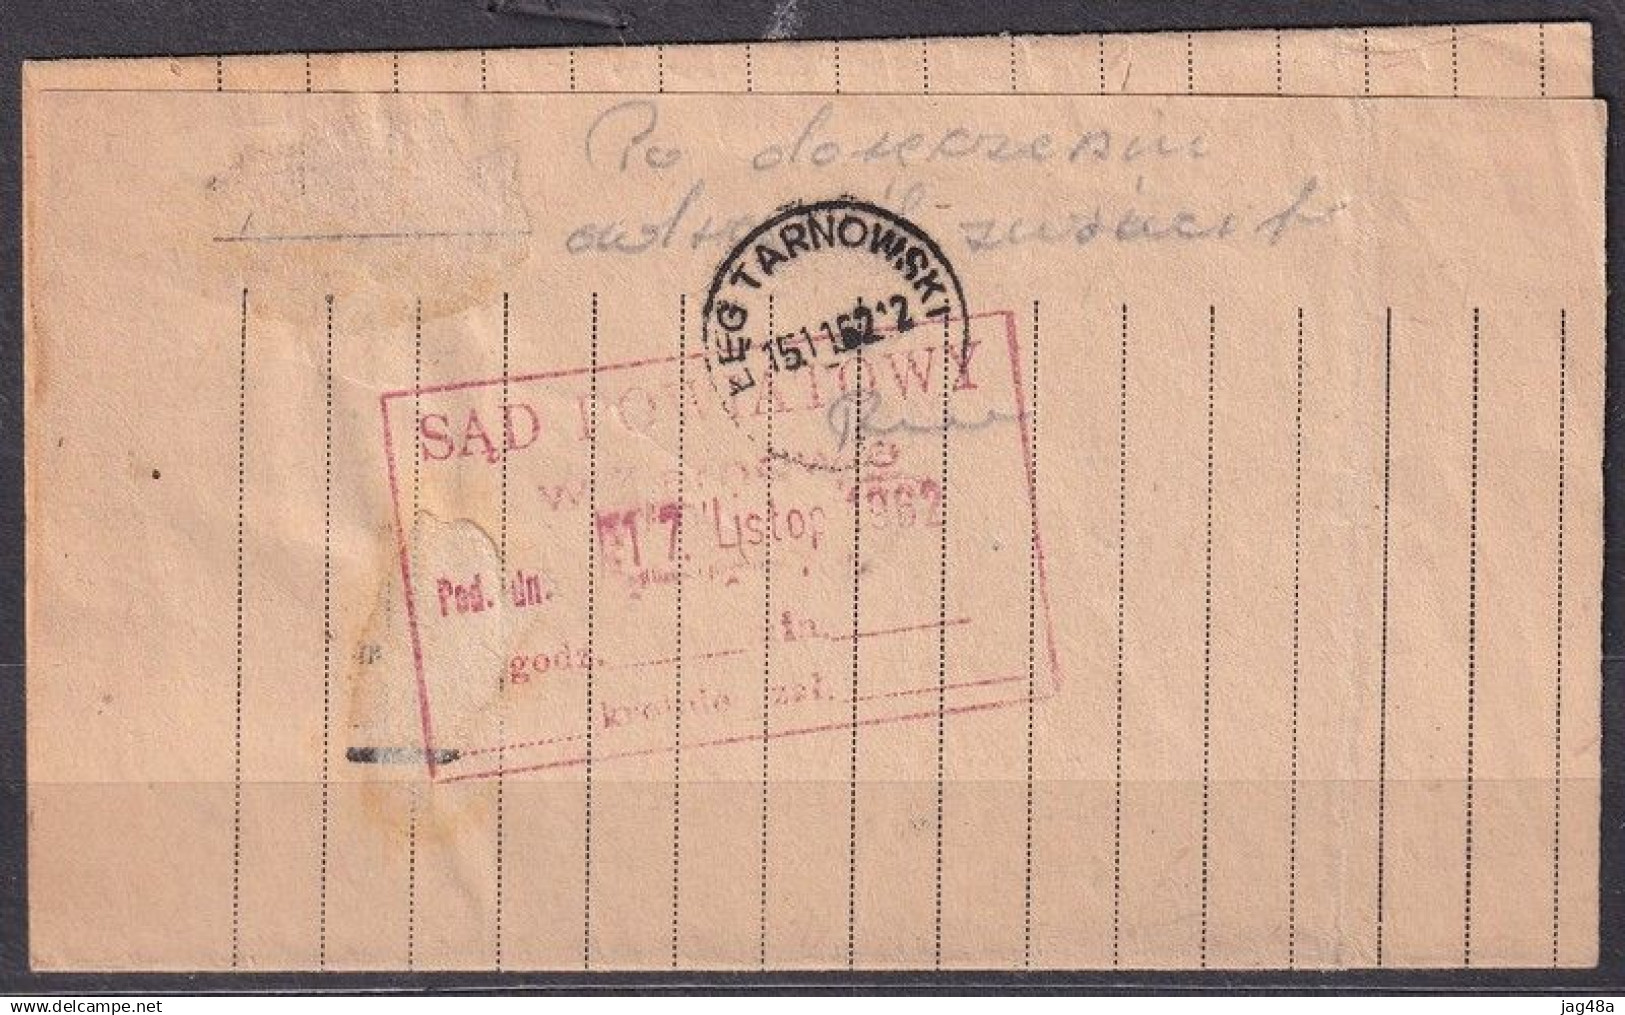 POLAND. 1962/Tarnow, DistrictCourt - Folded Envelope/retur To Sender. - Covers & Documents